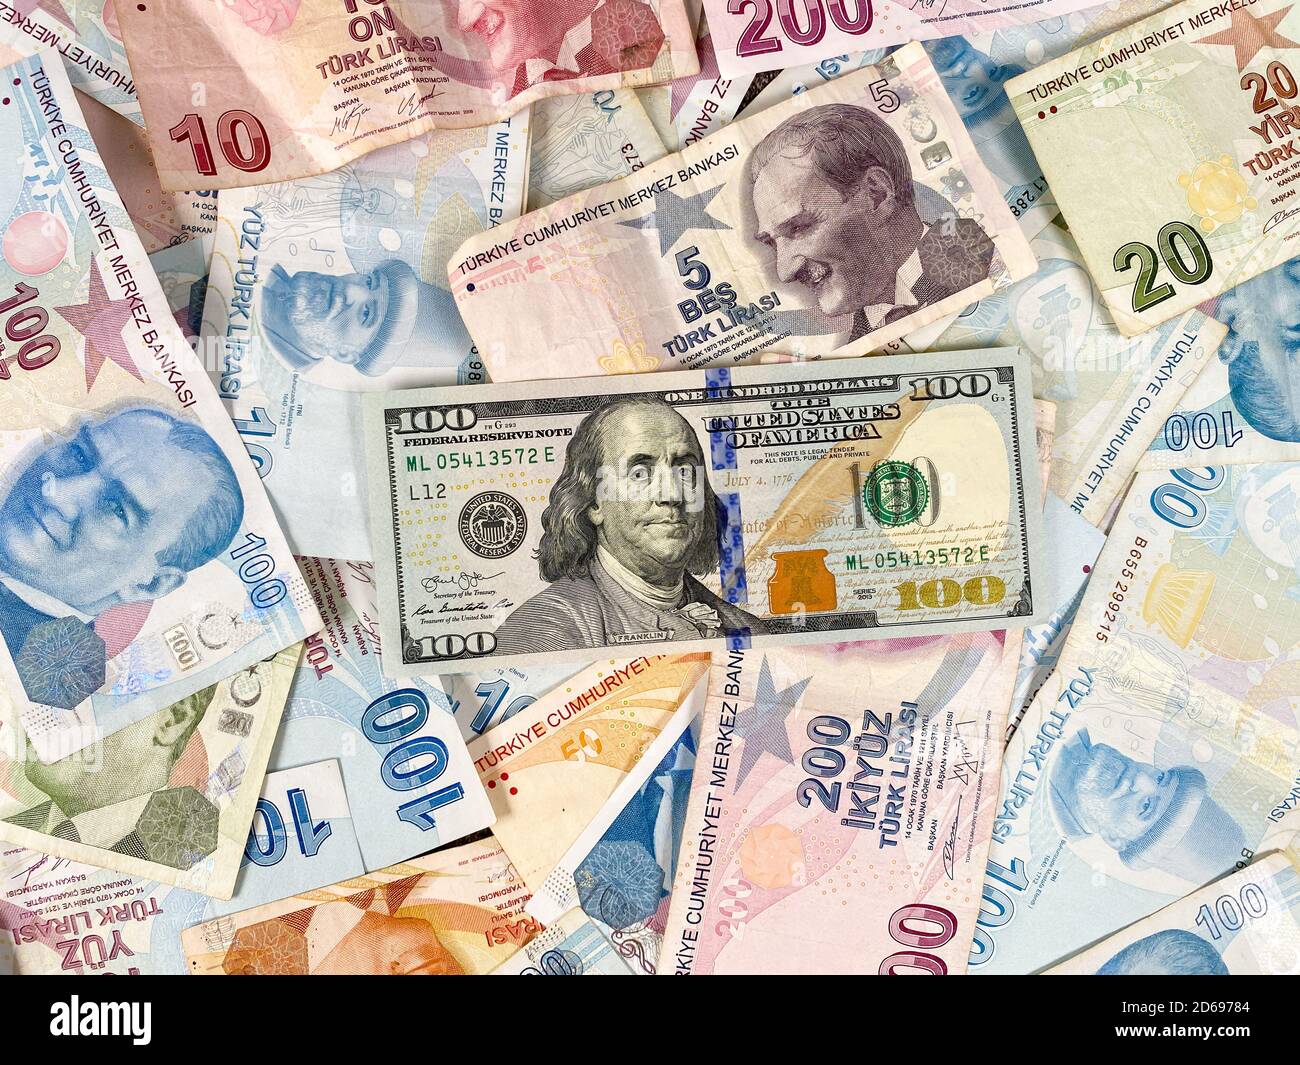 Turkish Liras and one hundred American Dollar. Turkish lira depreciates against the US dollar Stock Photo